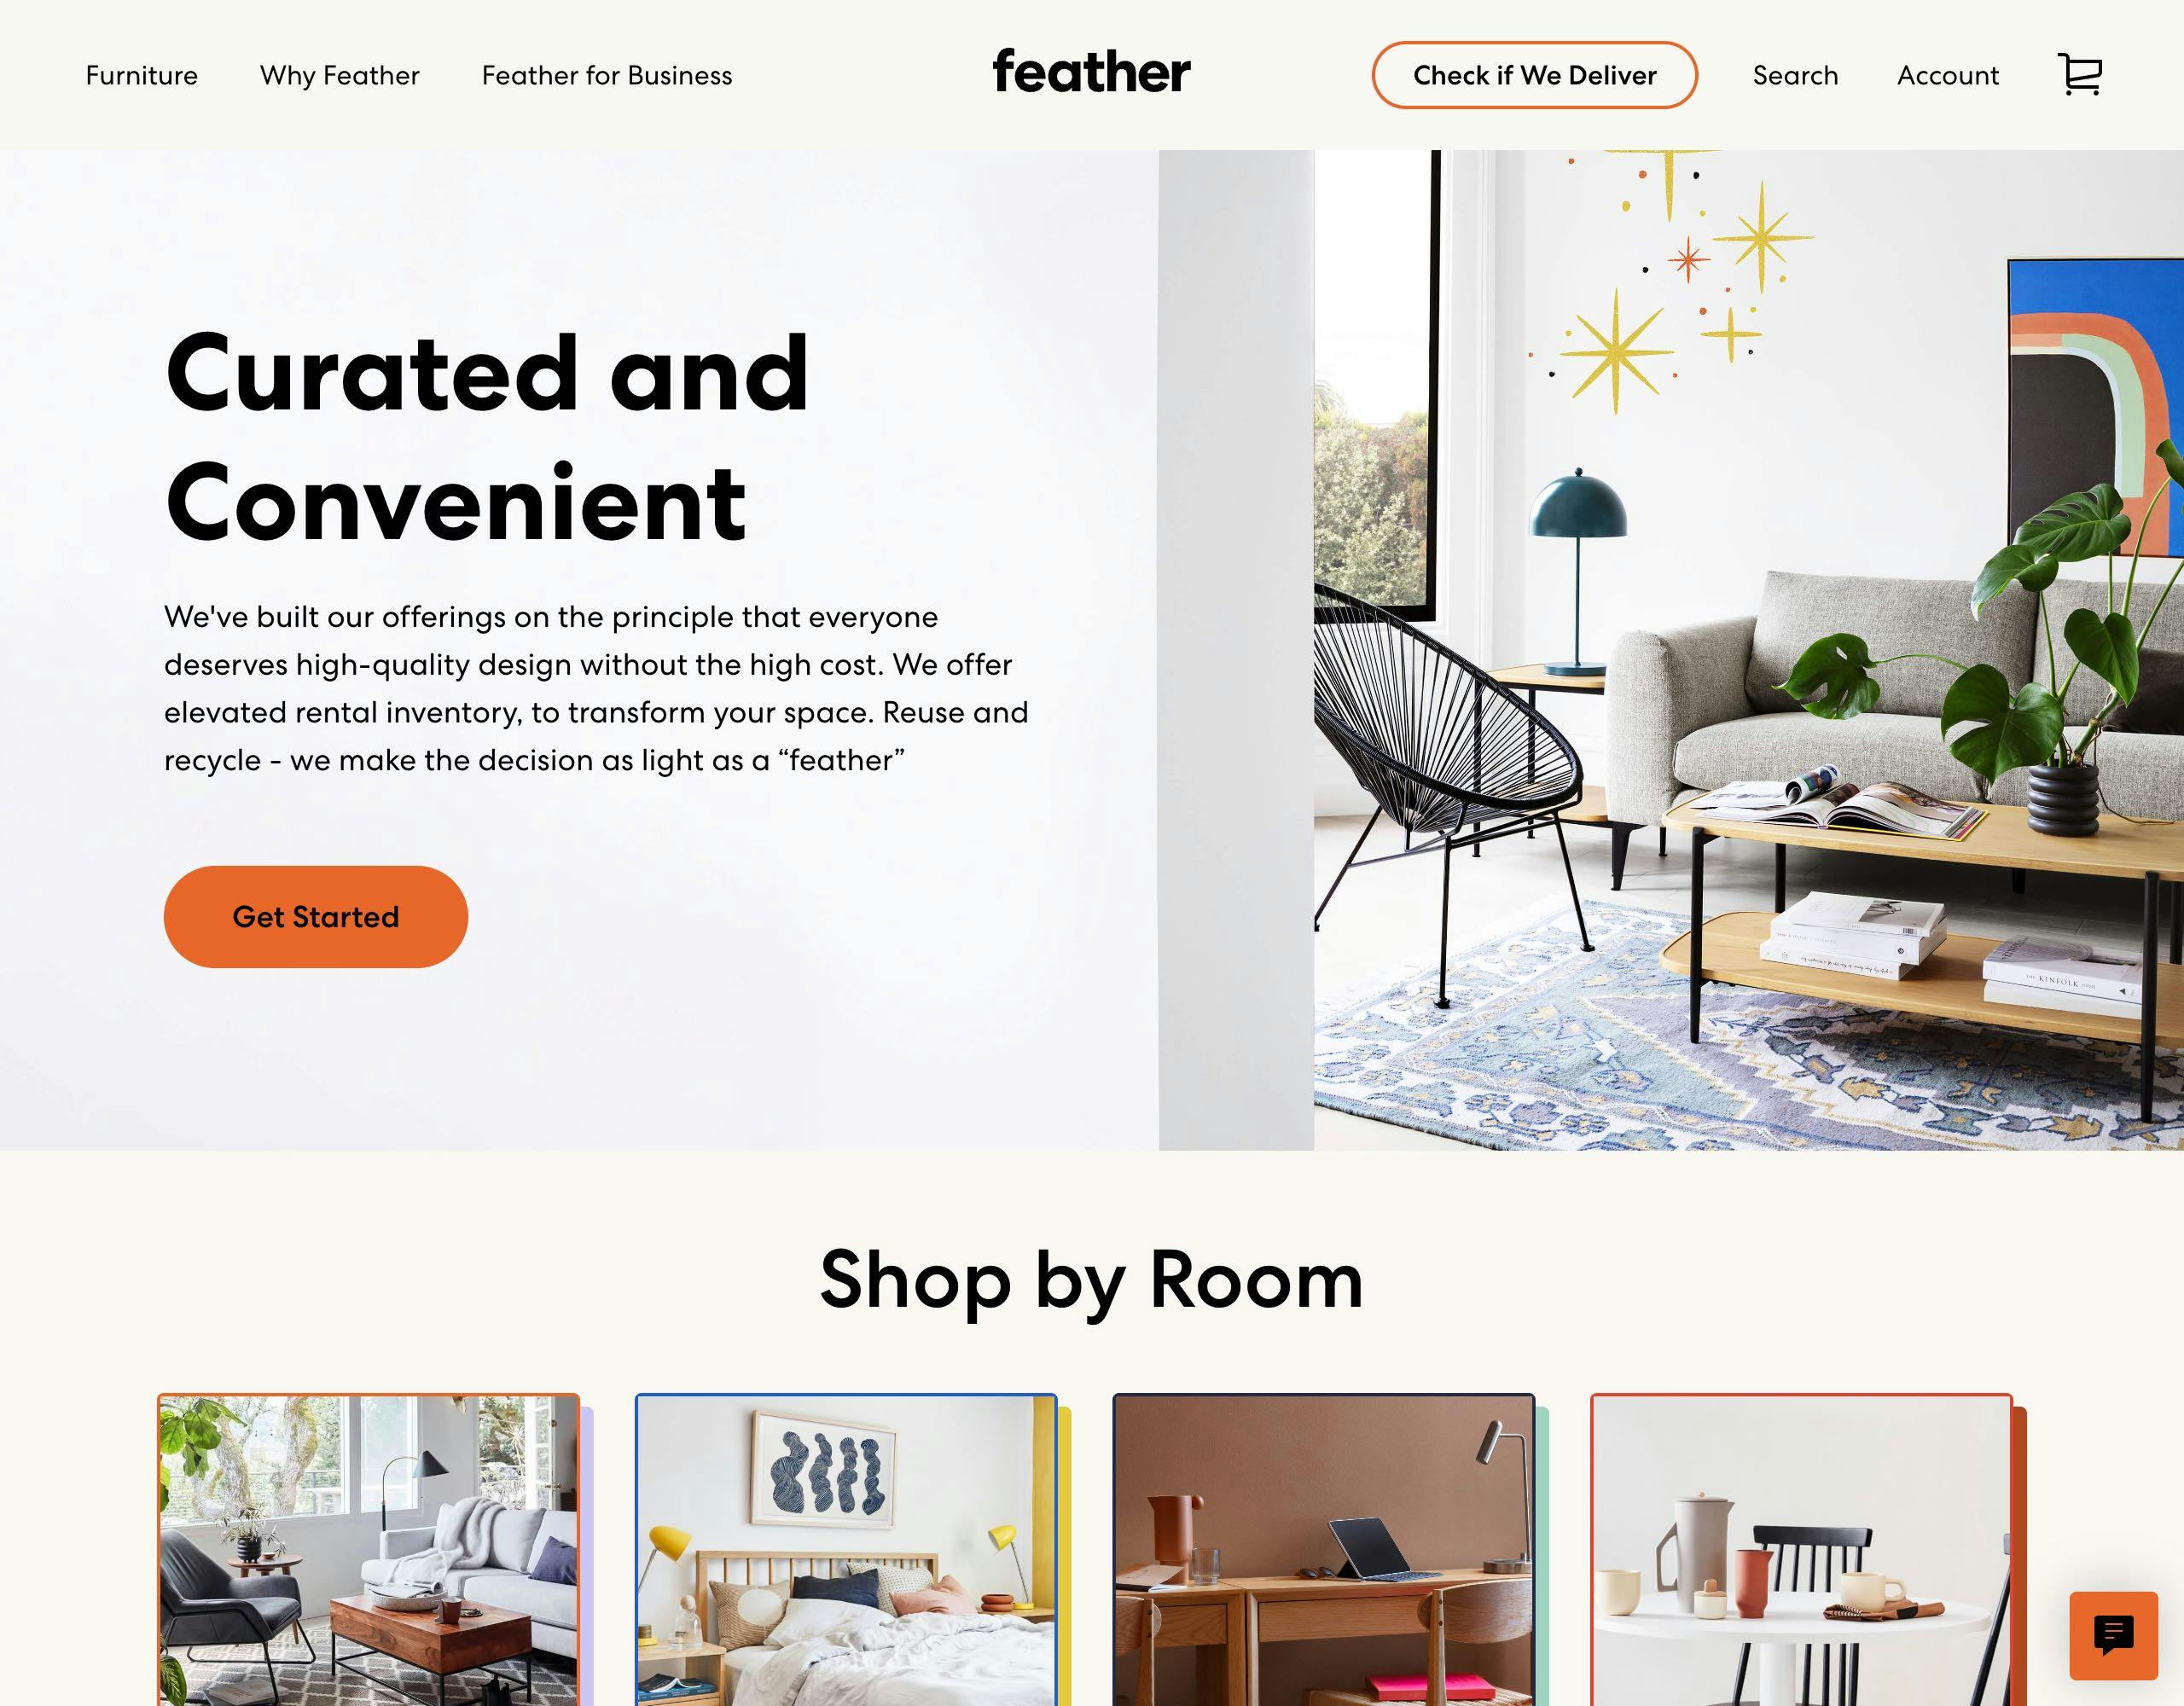 Feather website